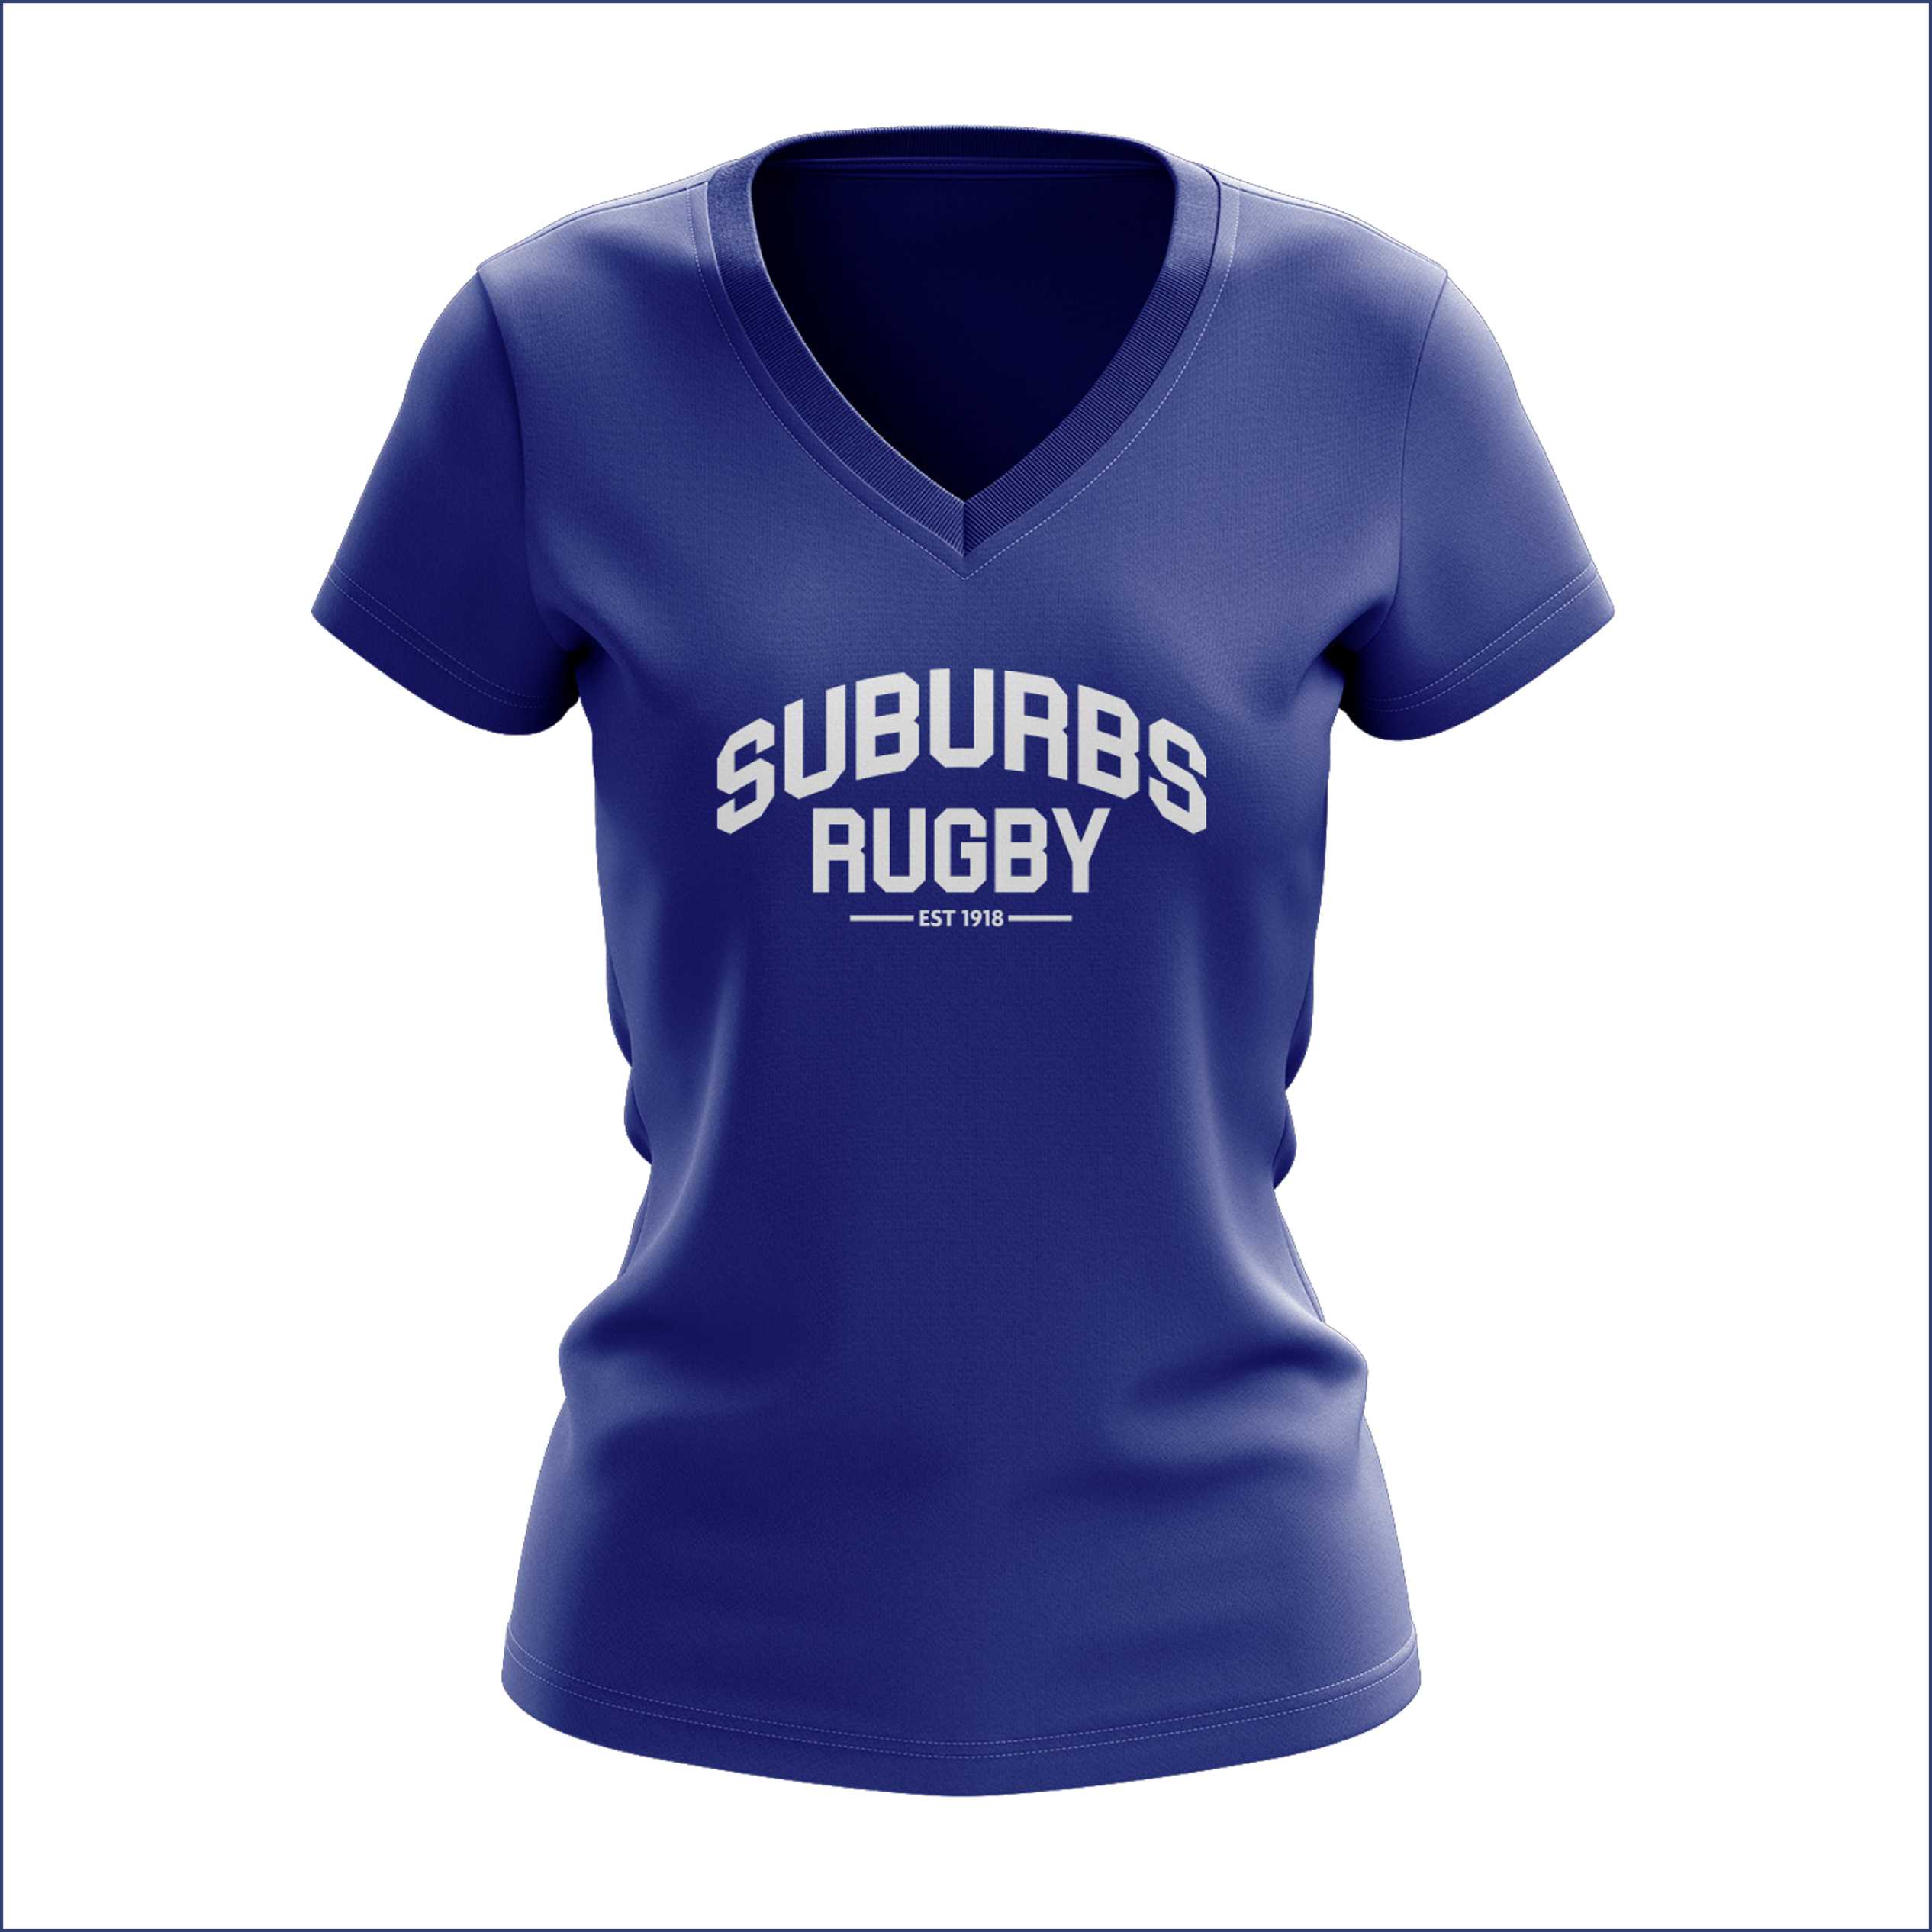 Suburbs Rugby Football Club - Catalogue.indd